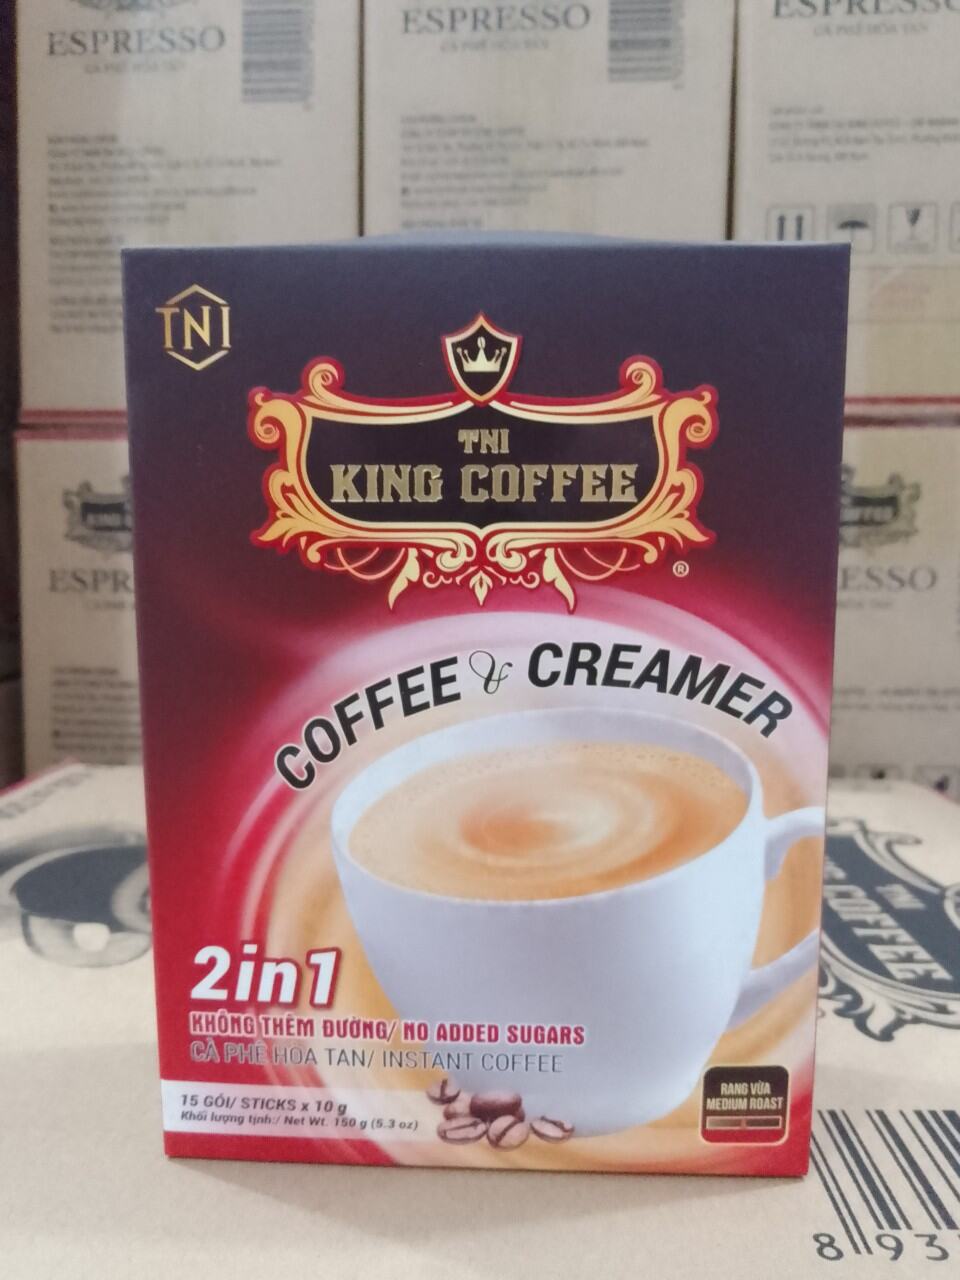 KING COFFEE 2IN1 Coffee & Creamer - Hộp 150 g 15 gói x 10 g